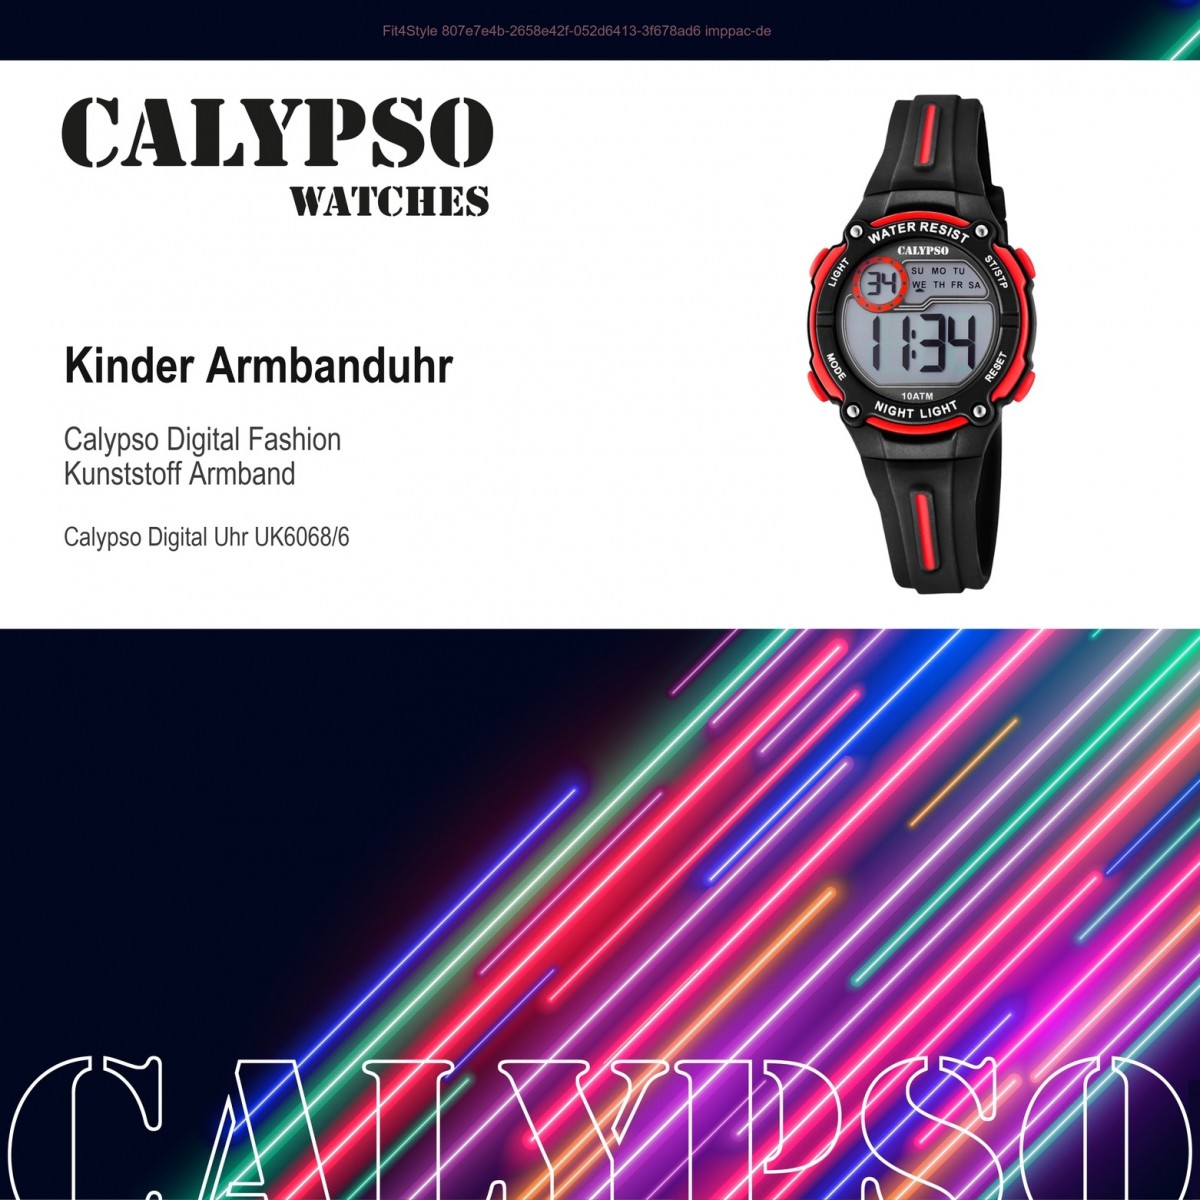 Calypso Kinder Armbanduhr Digital UK6068/6 Crush Quarz K6068/6 schwarz PU